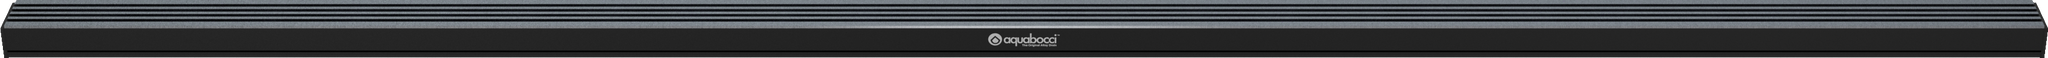 S66 Shower Kit | 2400mm / 94 Inch Length - Aquabocci Ltd